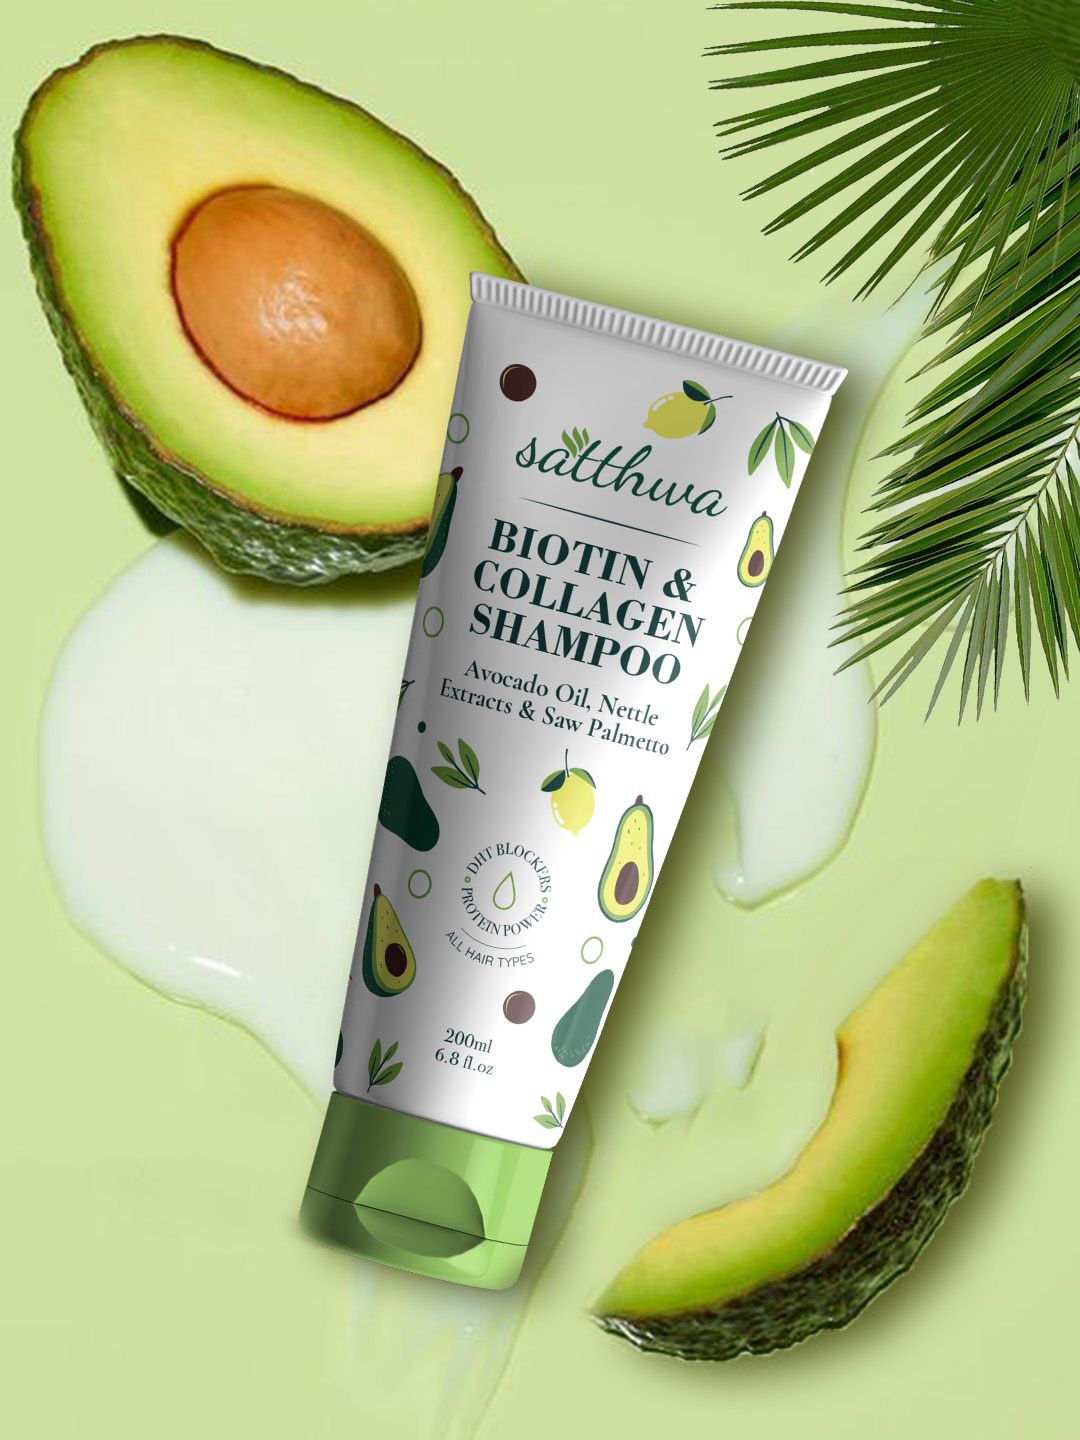 Satthwa Biotin & Collagen Shampoo with Avocado Oil 200 ml Price in India